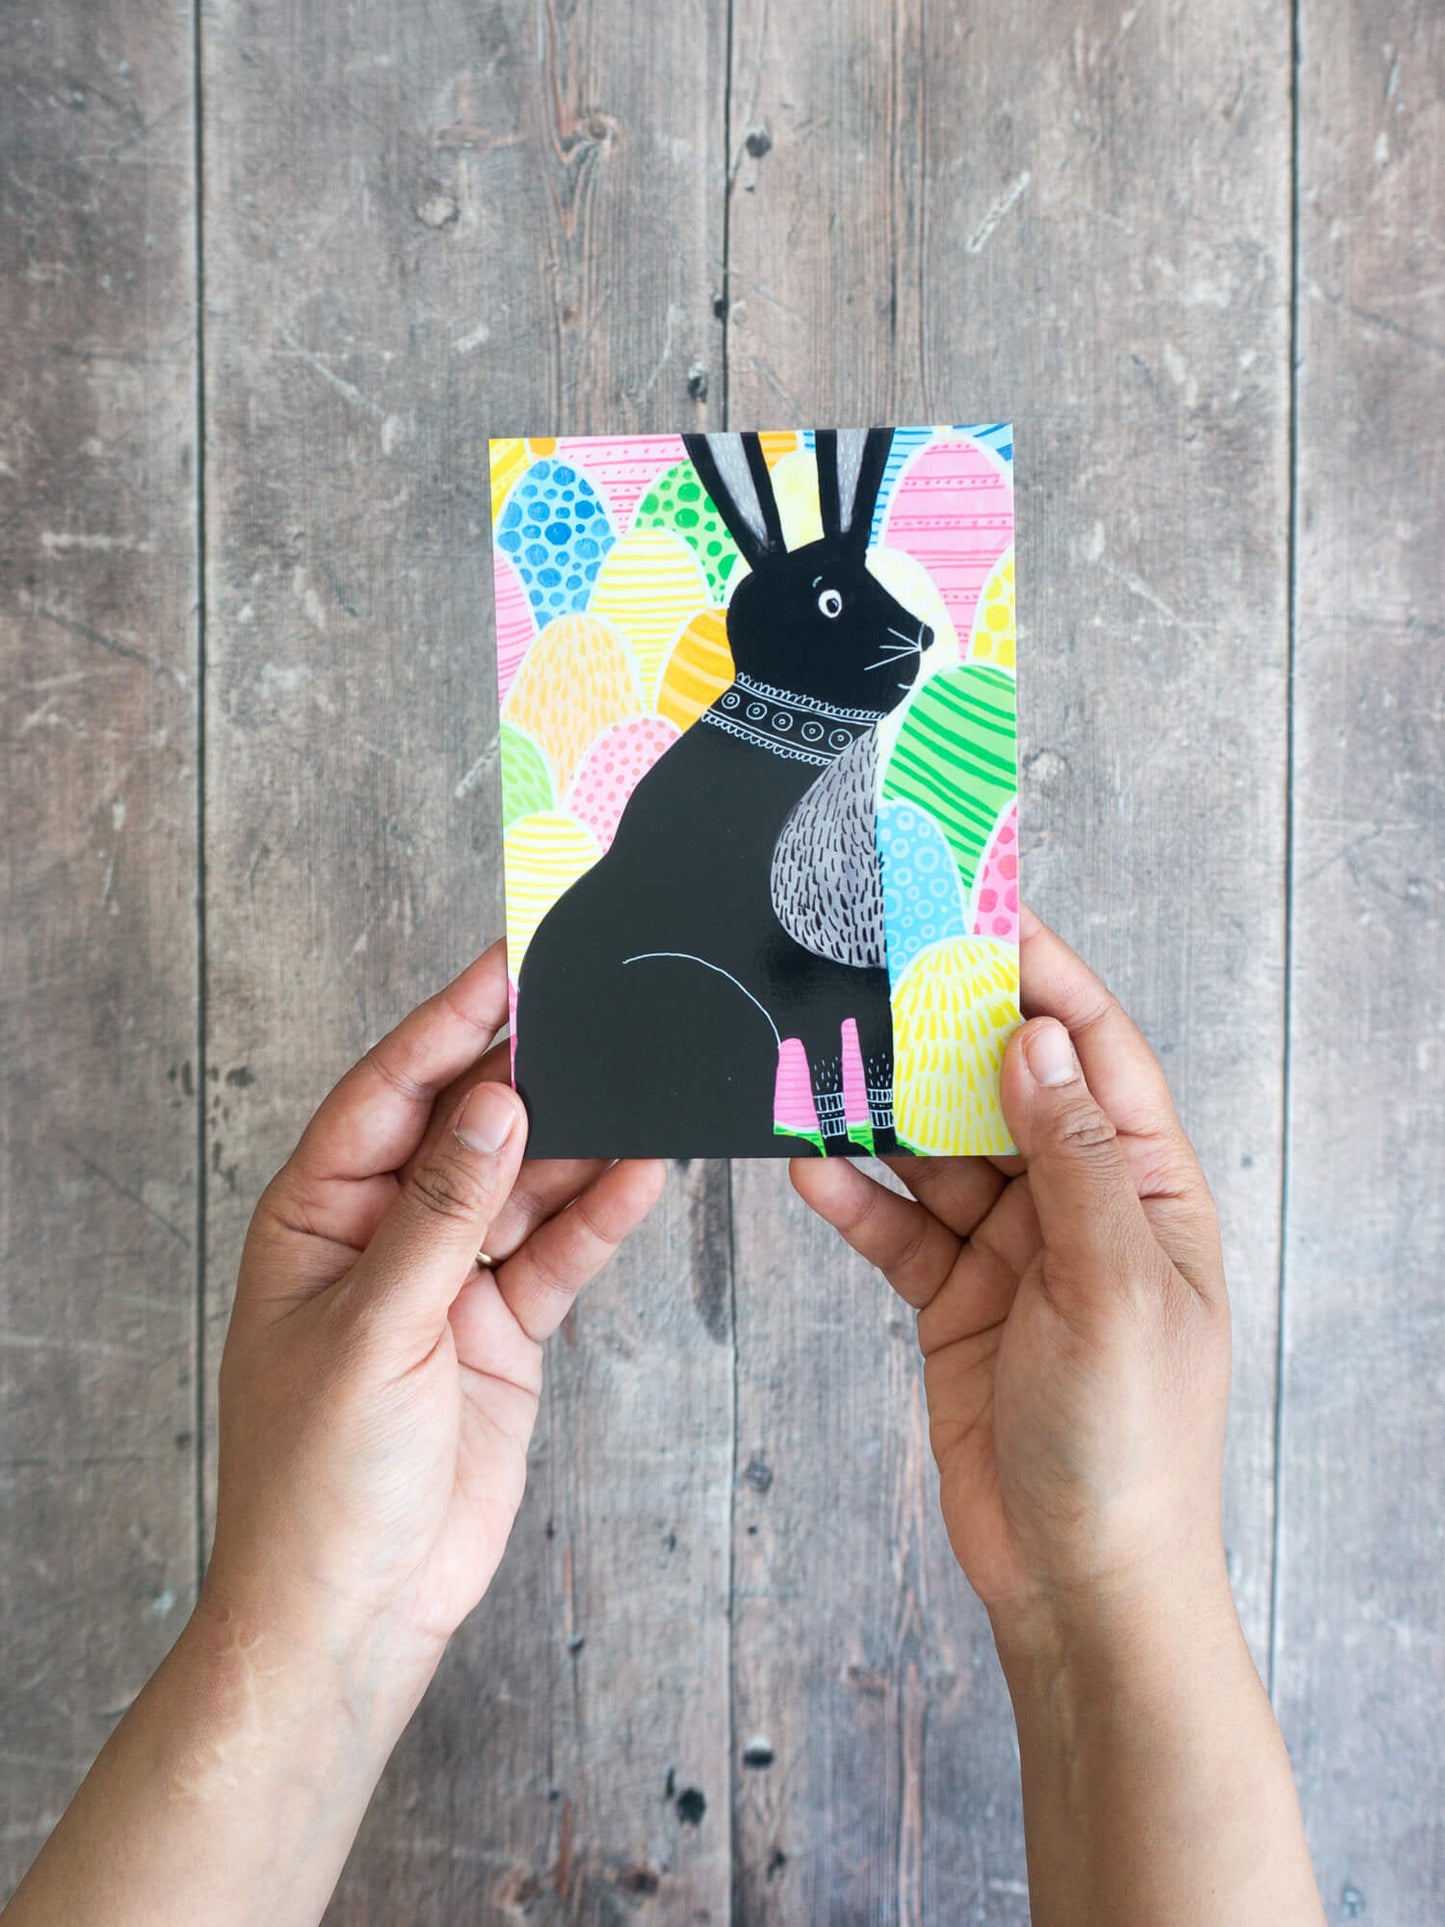 Easter Fluffies – A6 postcard mini-prints